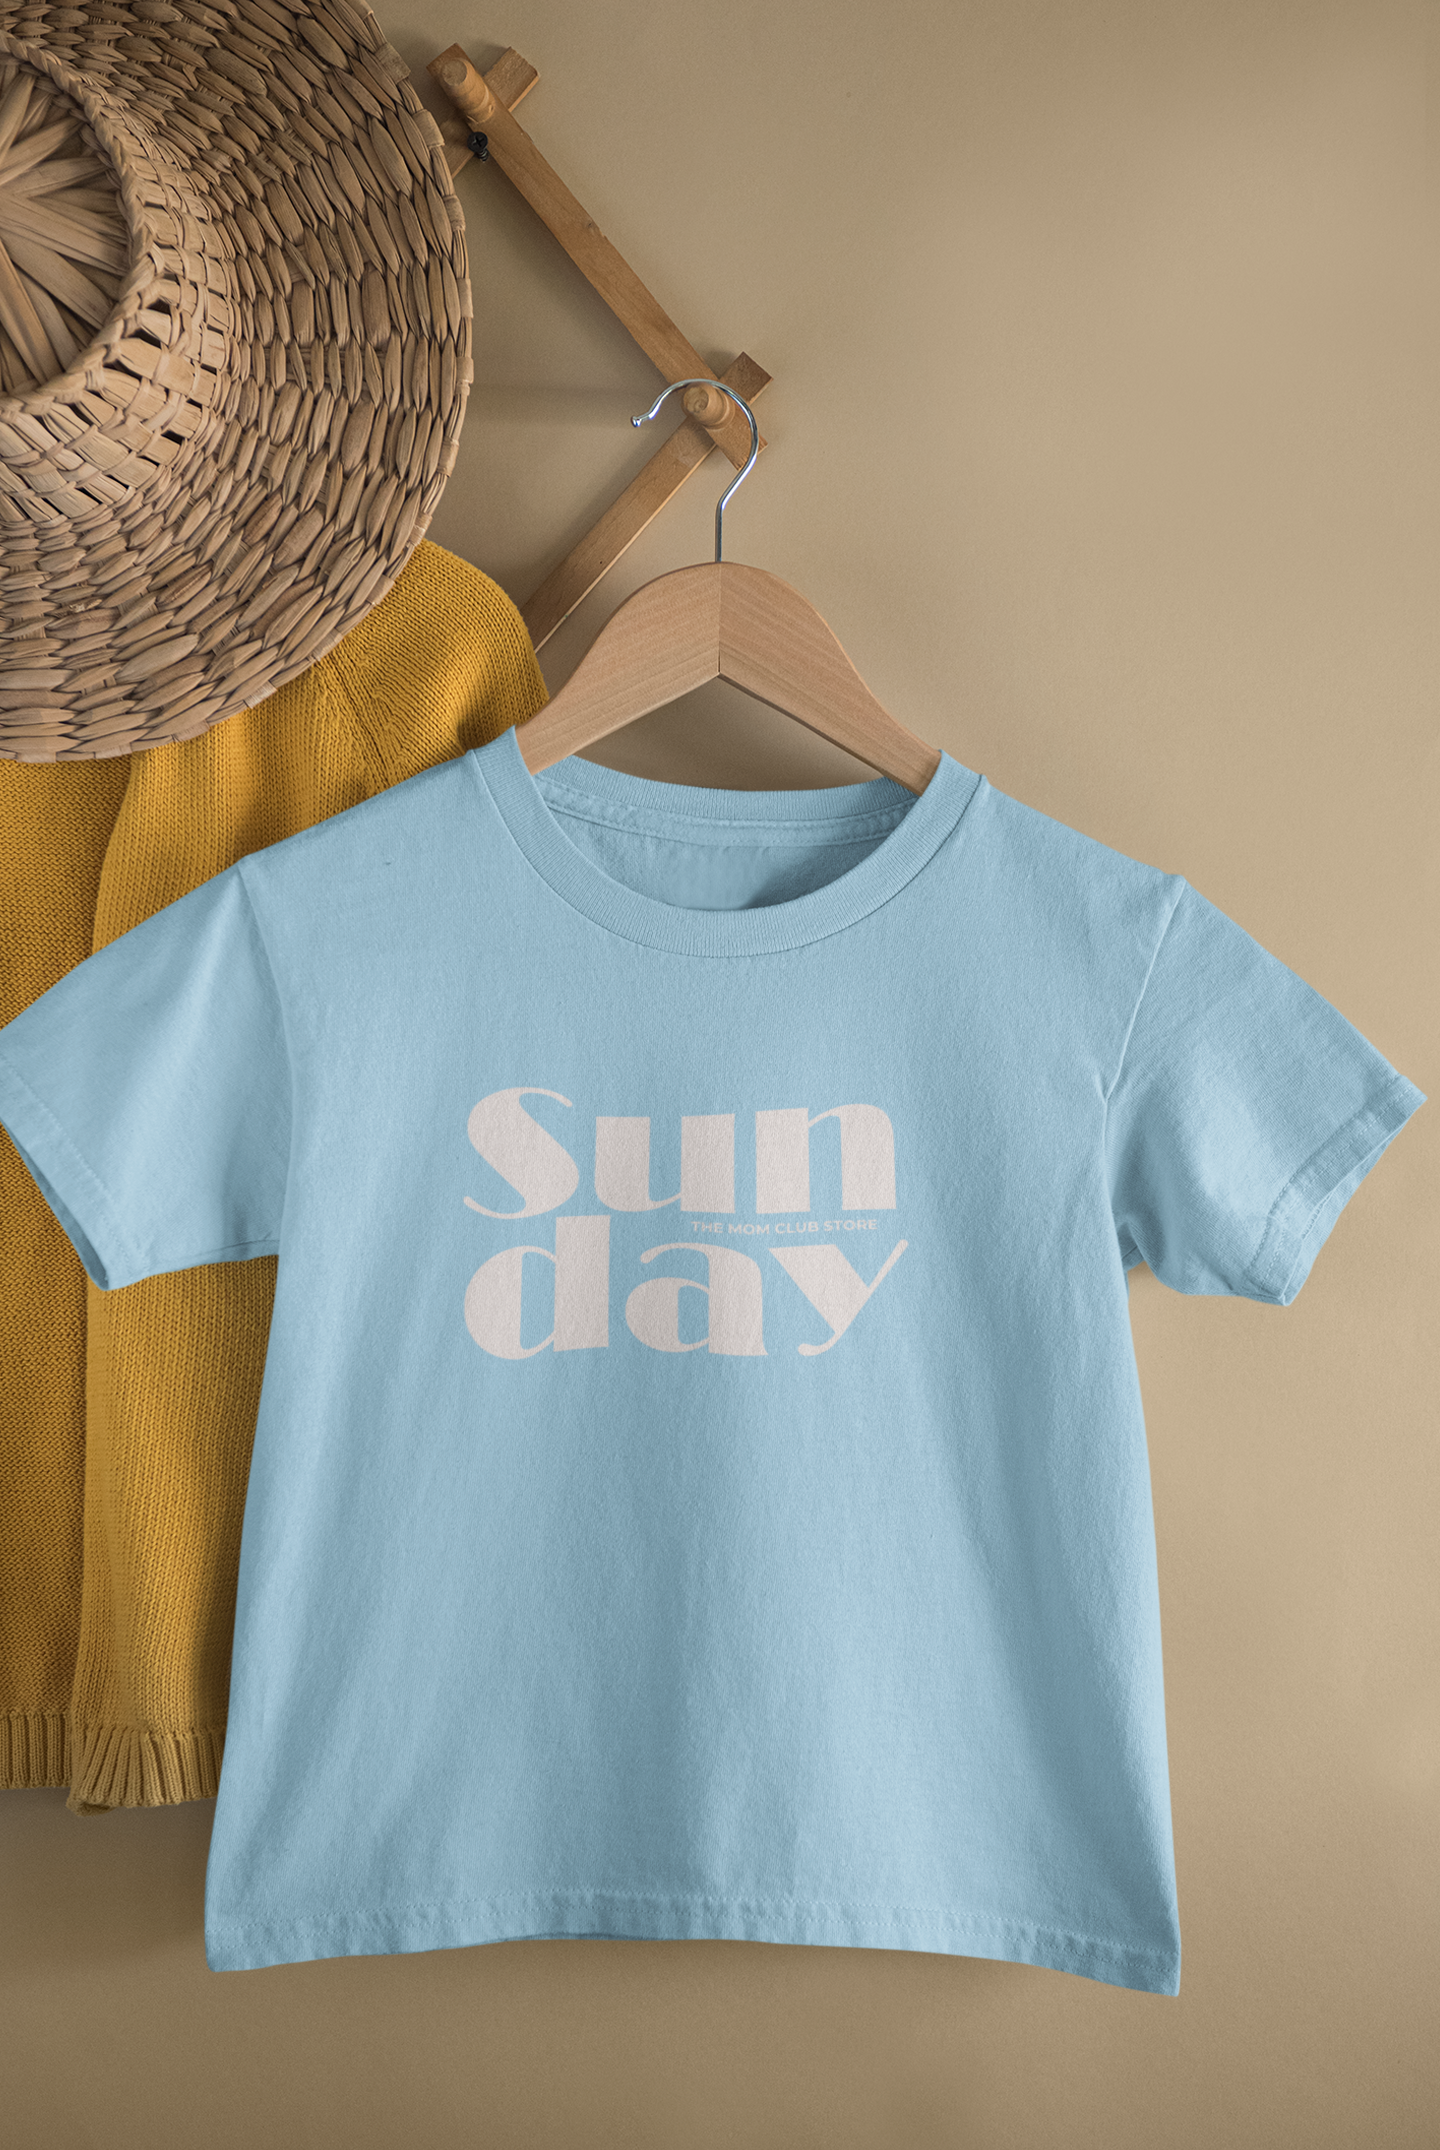 SUNDAY Unisex Print Short-Sleeve T-Shirt for Toddlers